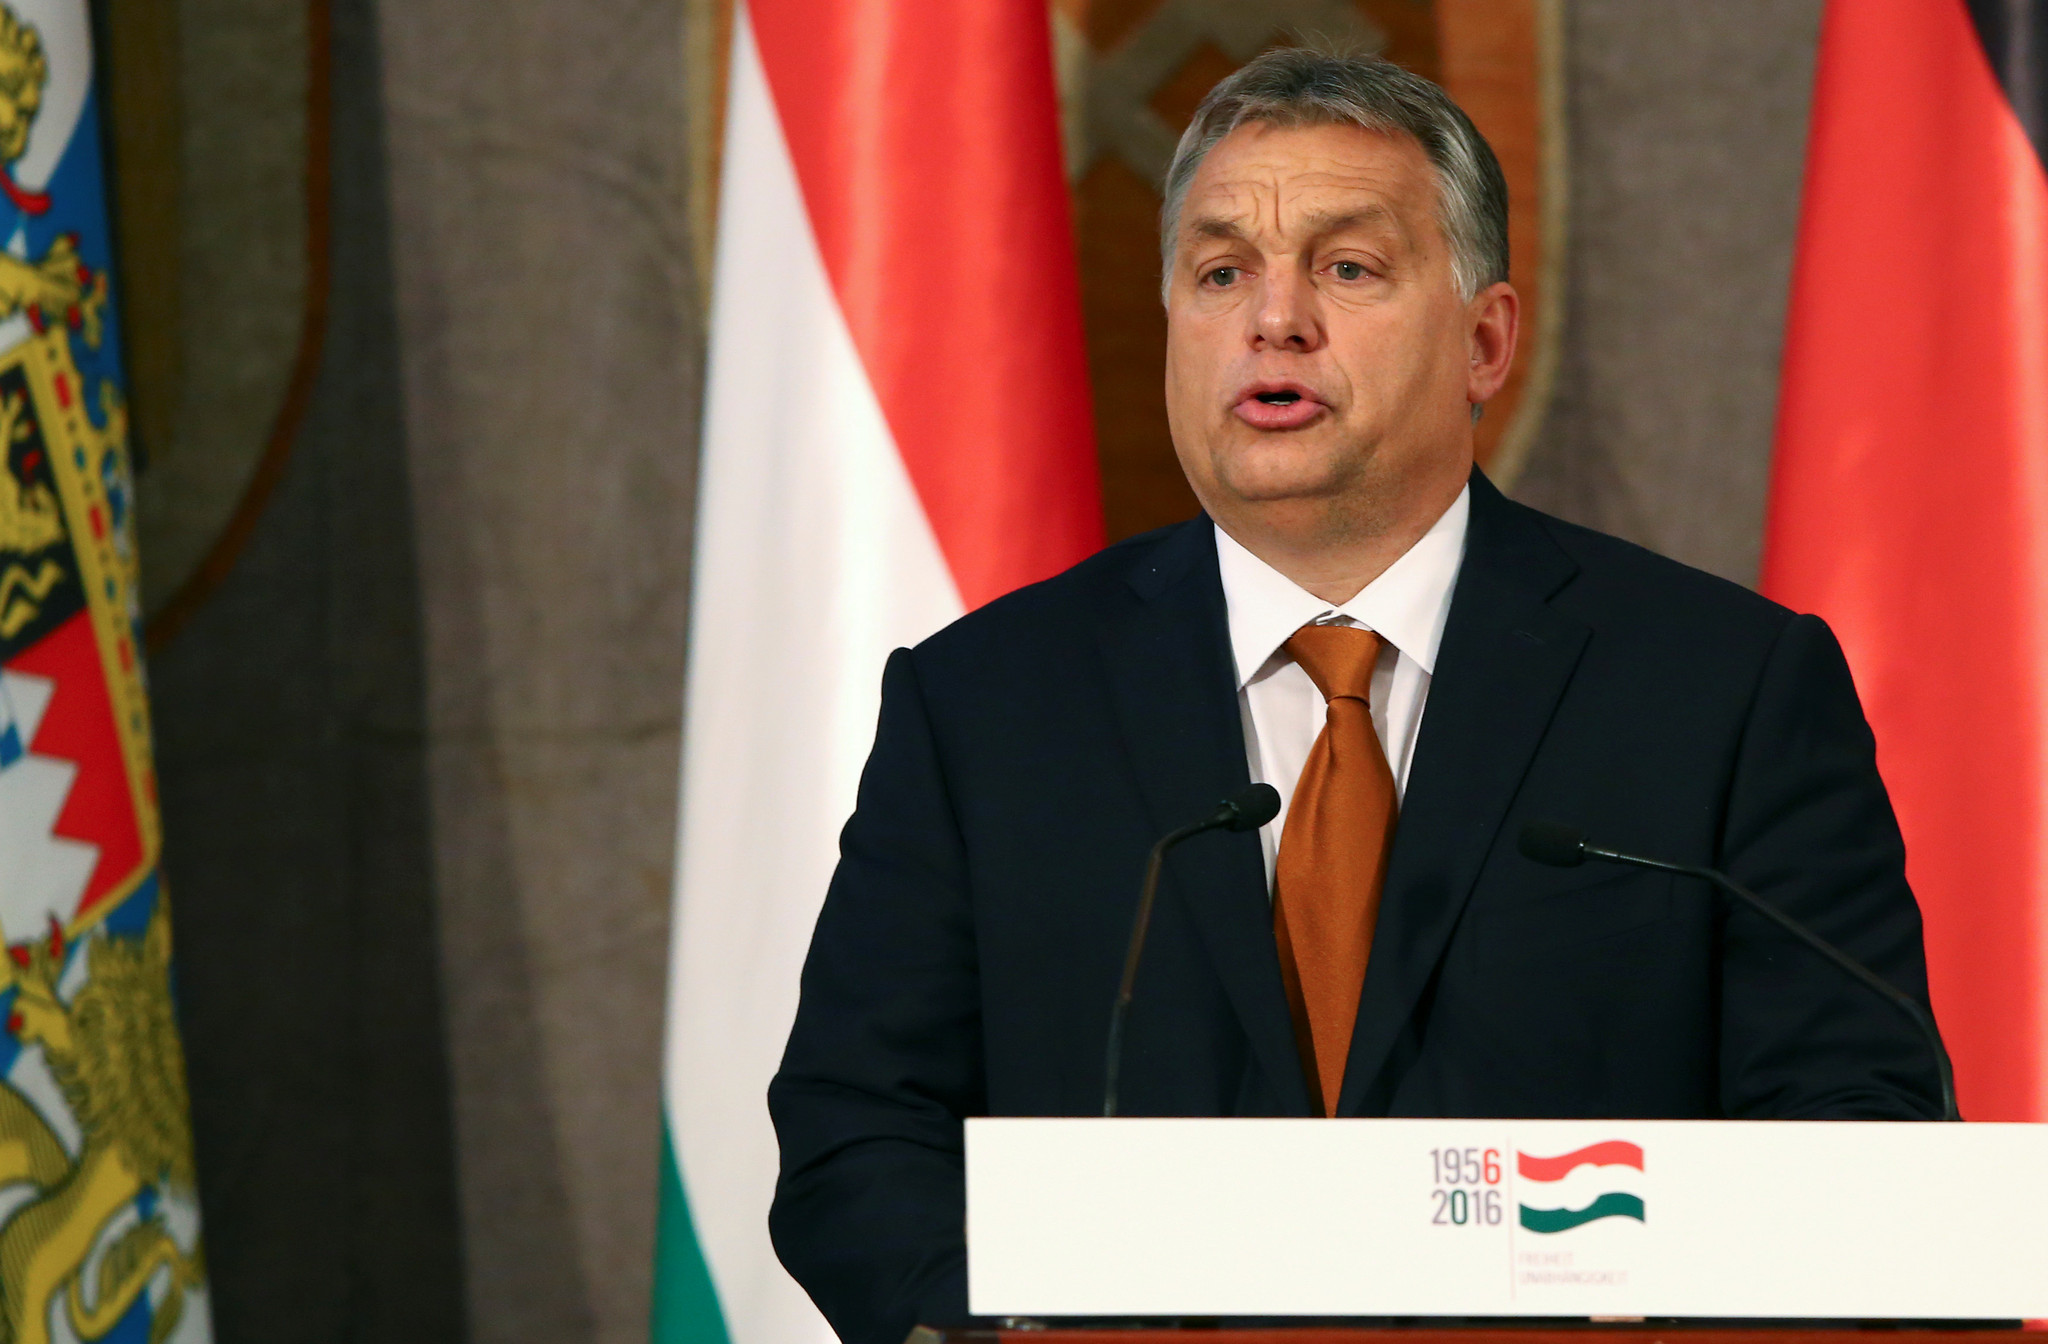 Viktor Orban.jpg